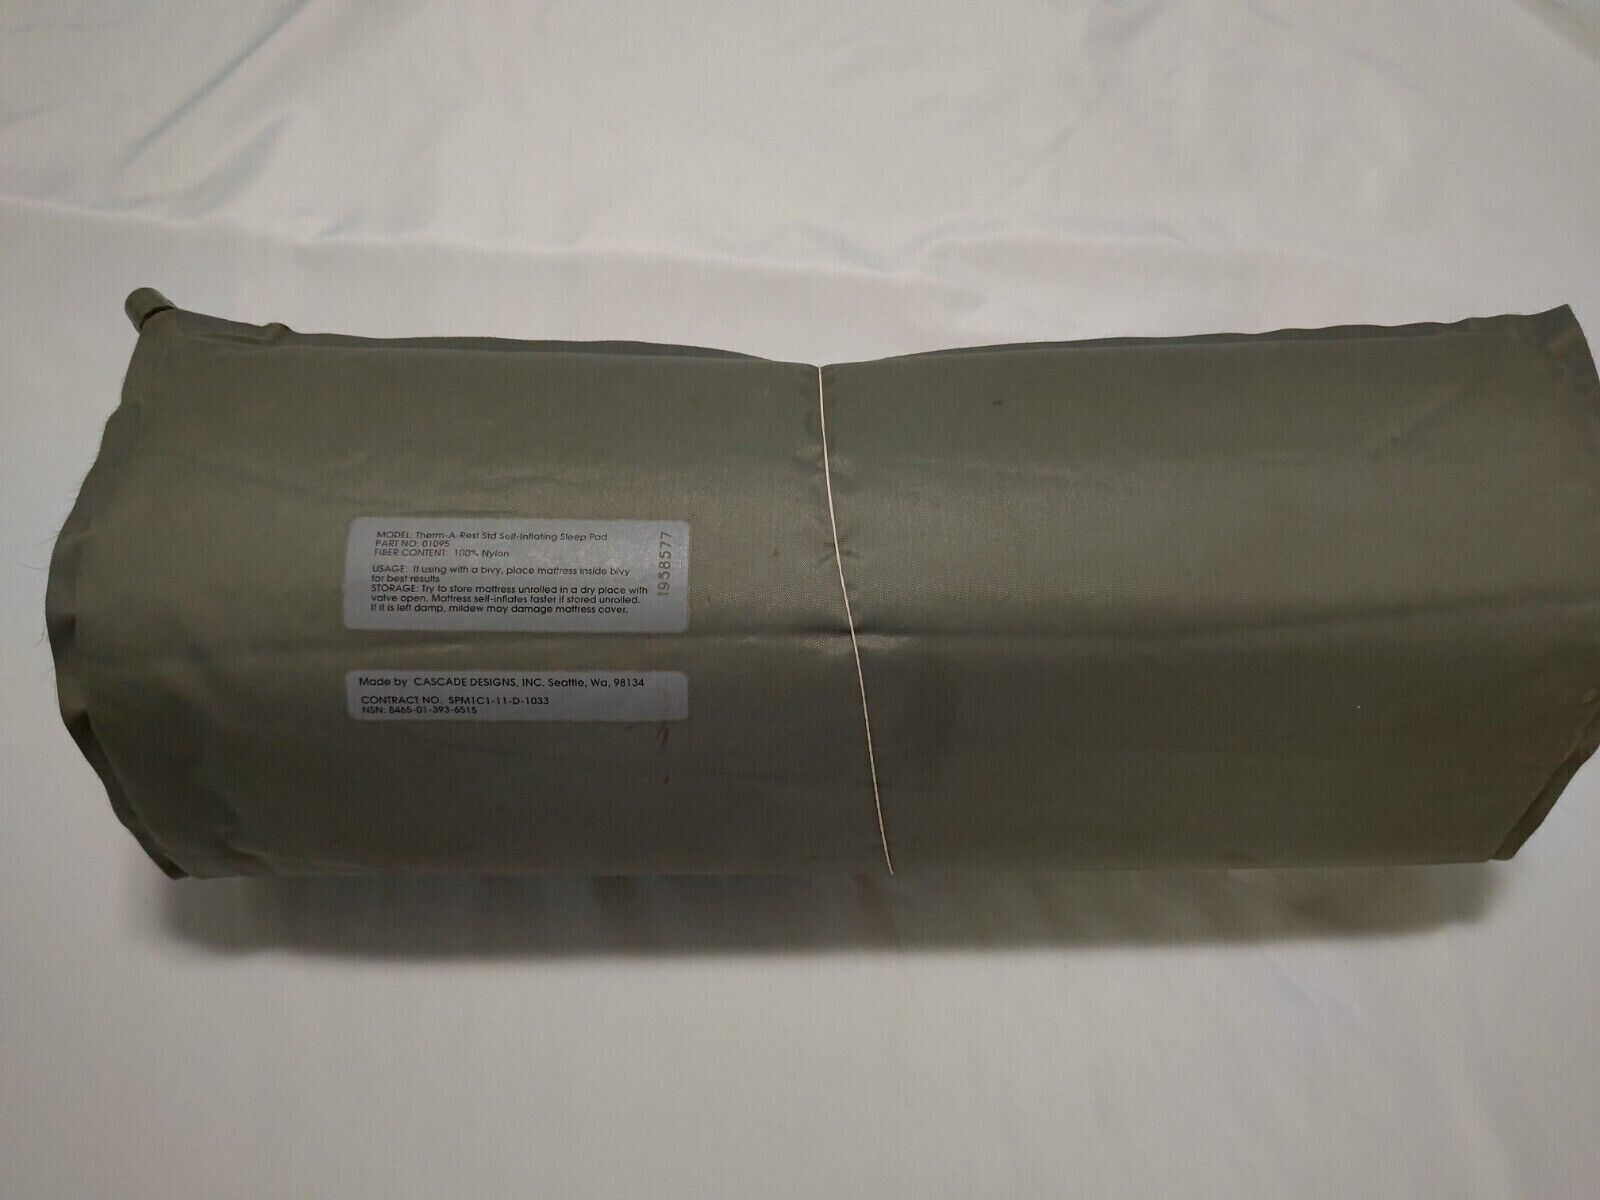 US Military Thermarest FOLIAGE Self Inflating Sleep Mat / Sleeping Pad VGC